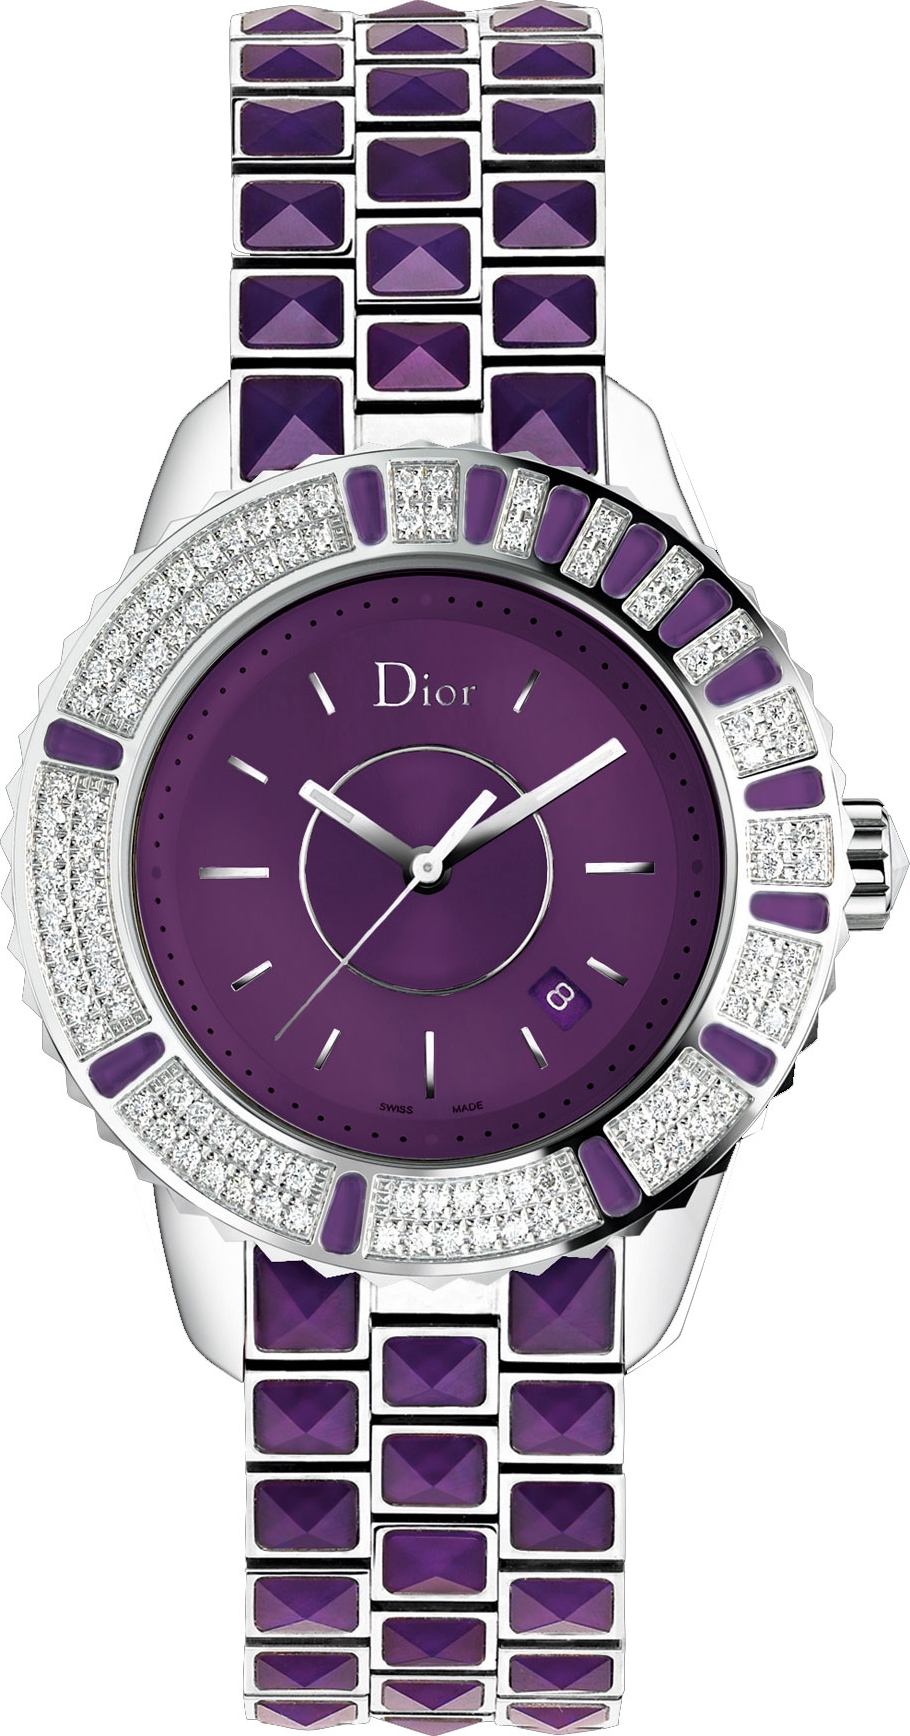 Đồng Hồ Dior La D De Dior Quartz Diamond Mặt Xanh Lá CD043171A003 Nữ Sale  Giá Rẻ  XaXi